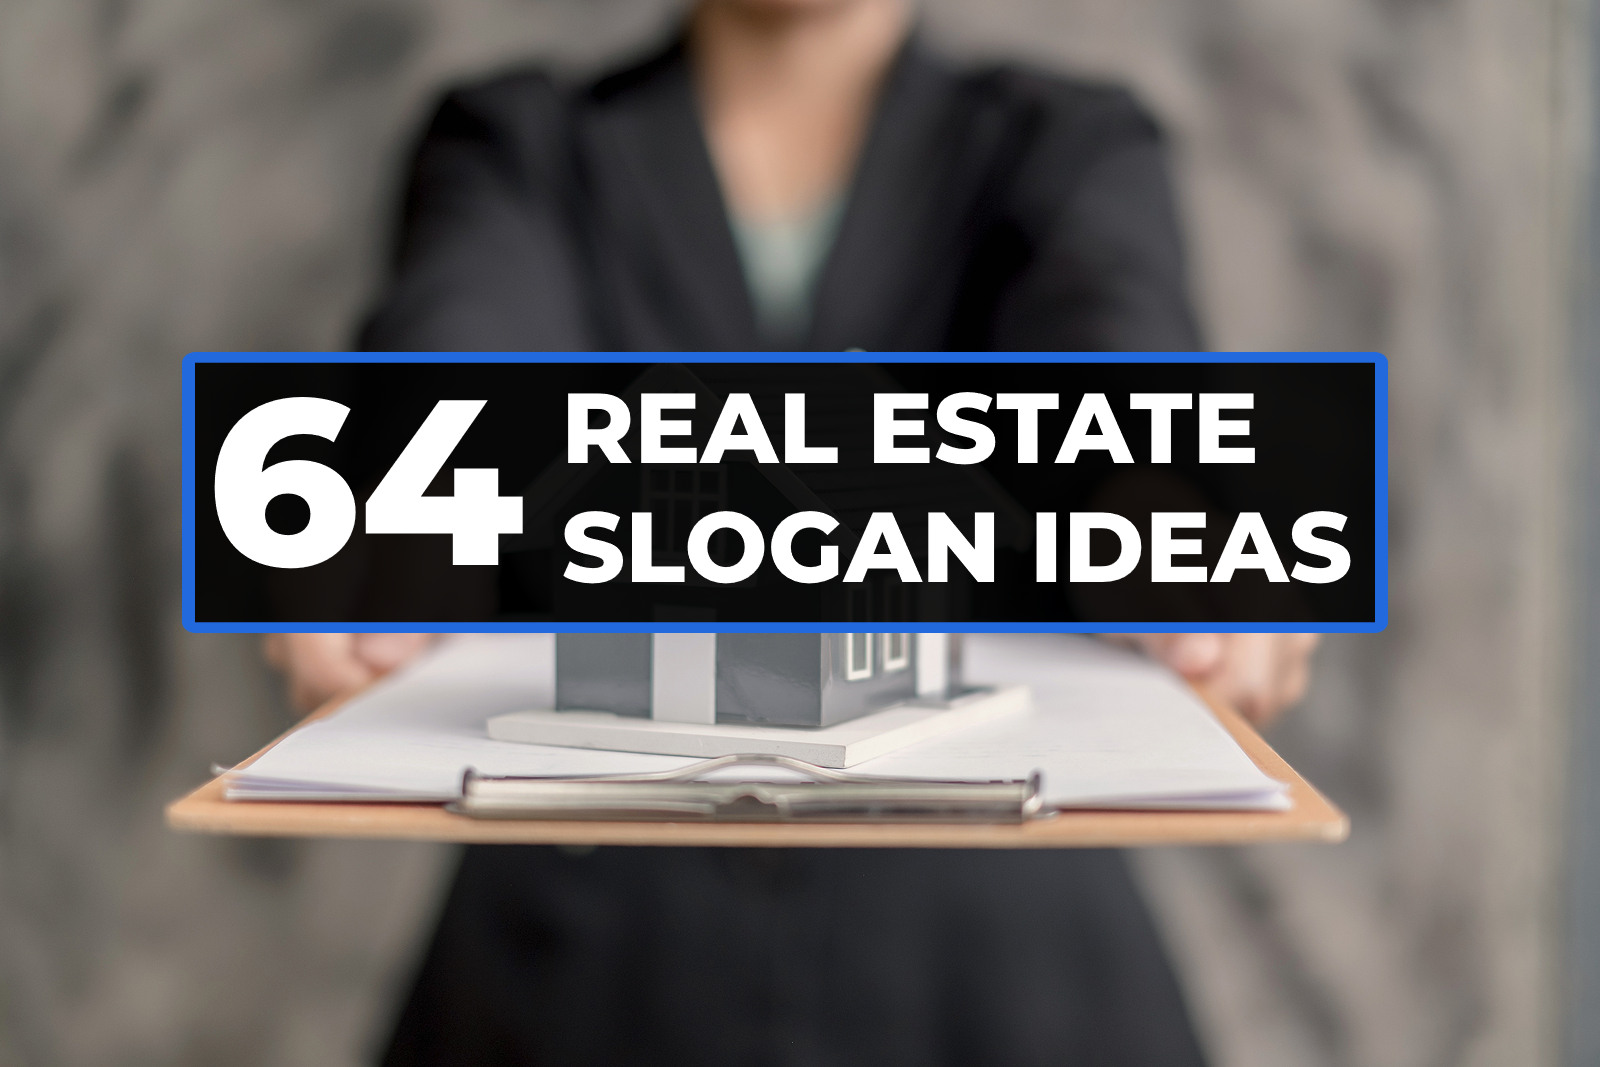 64 real estate slogan ideas